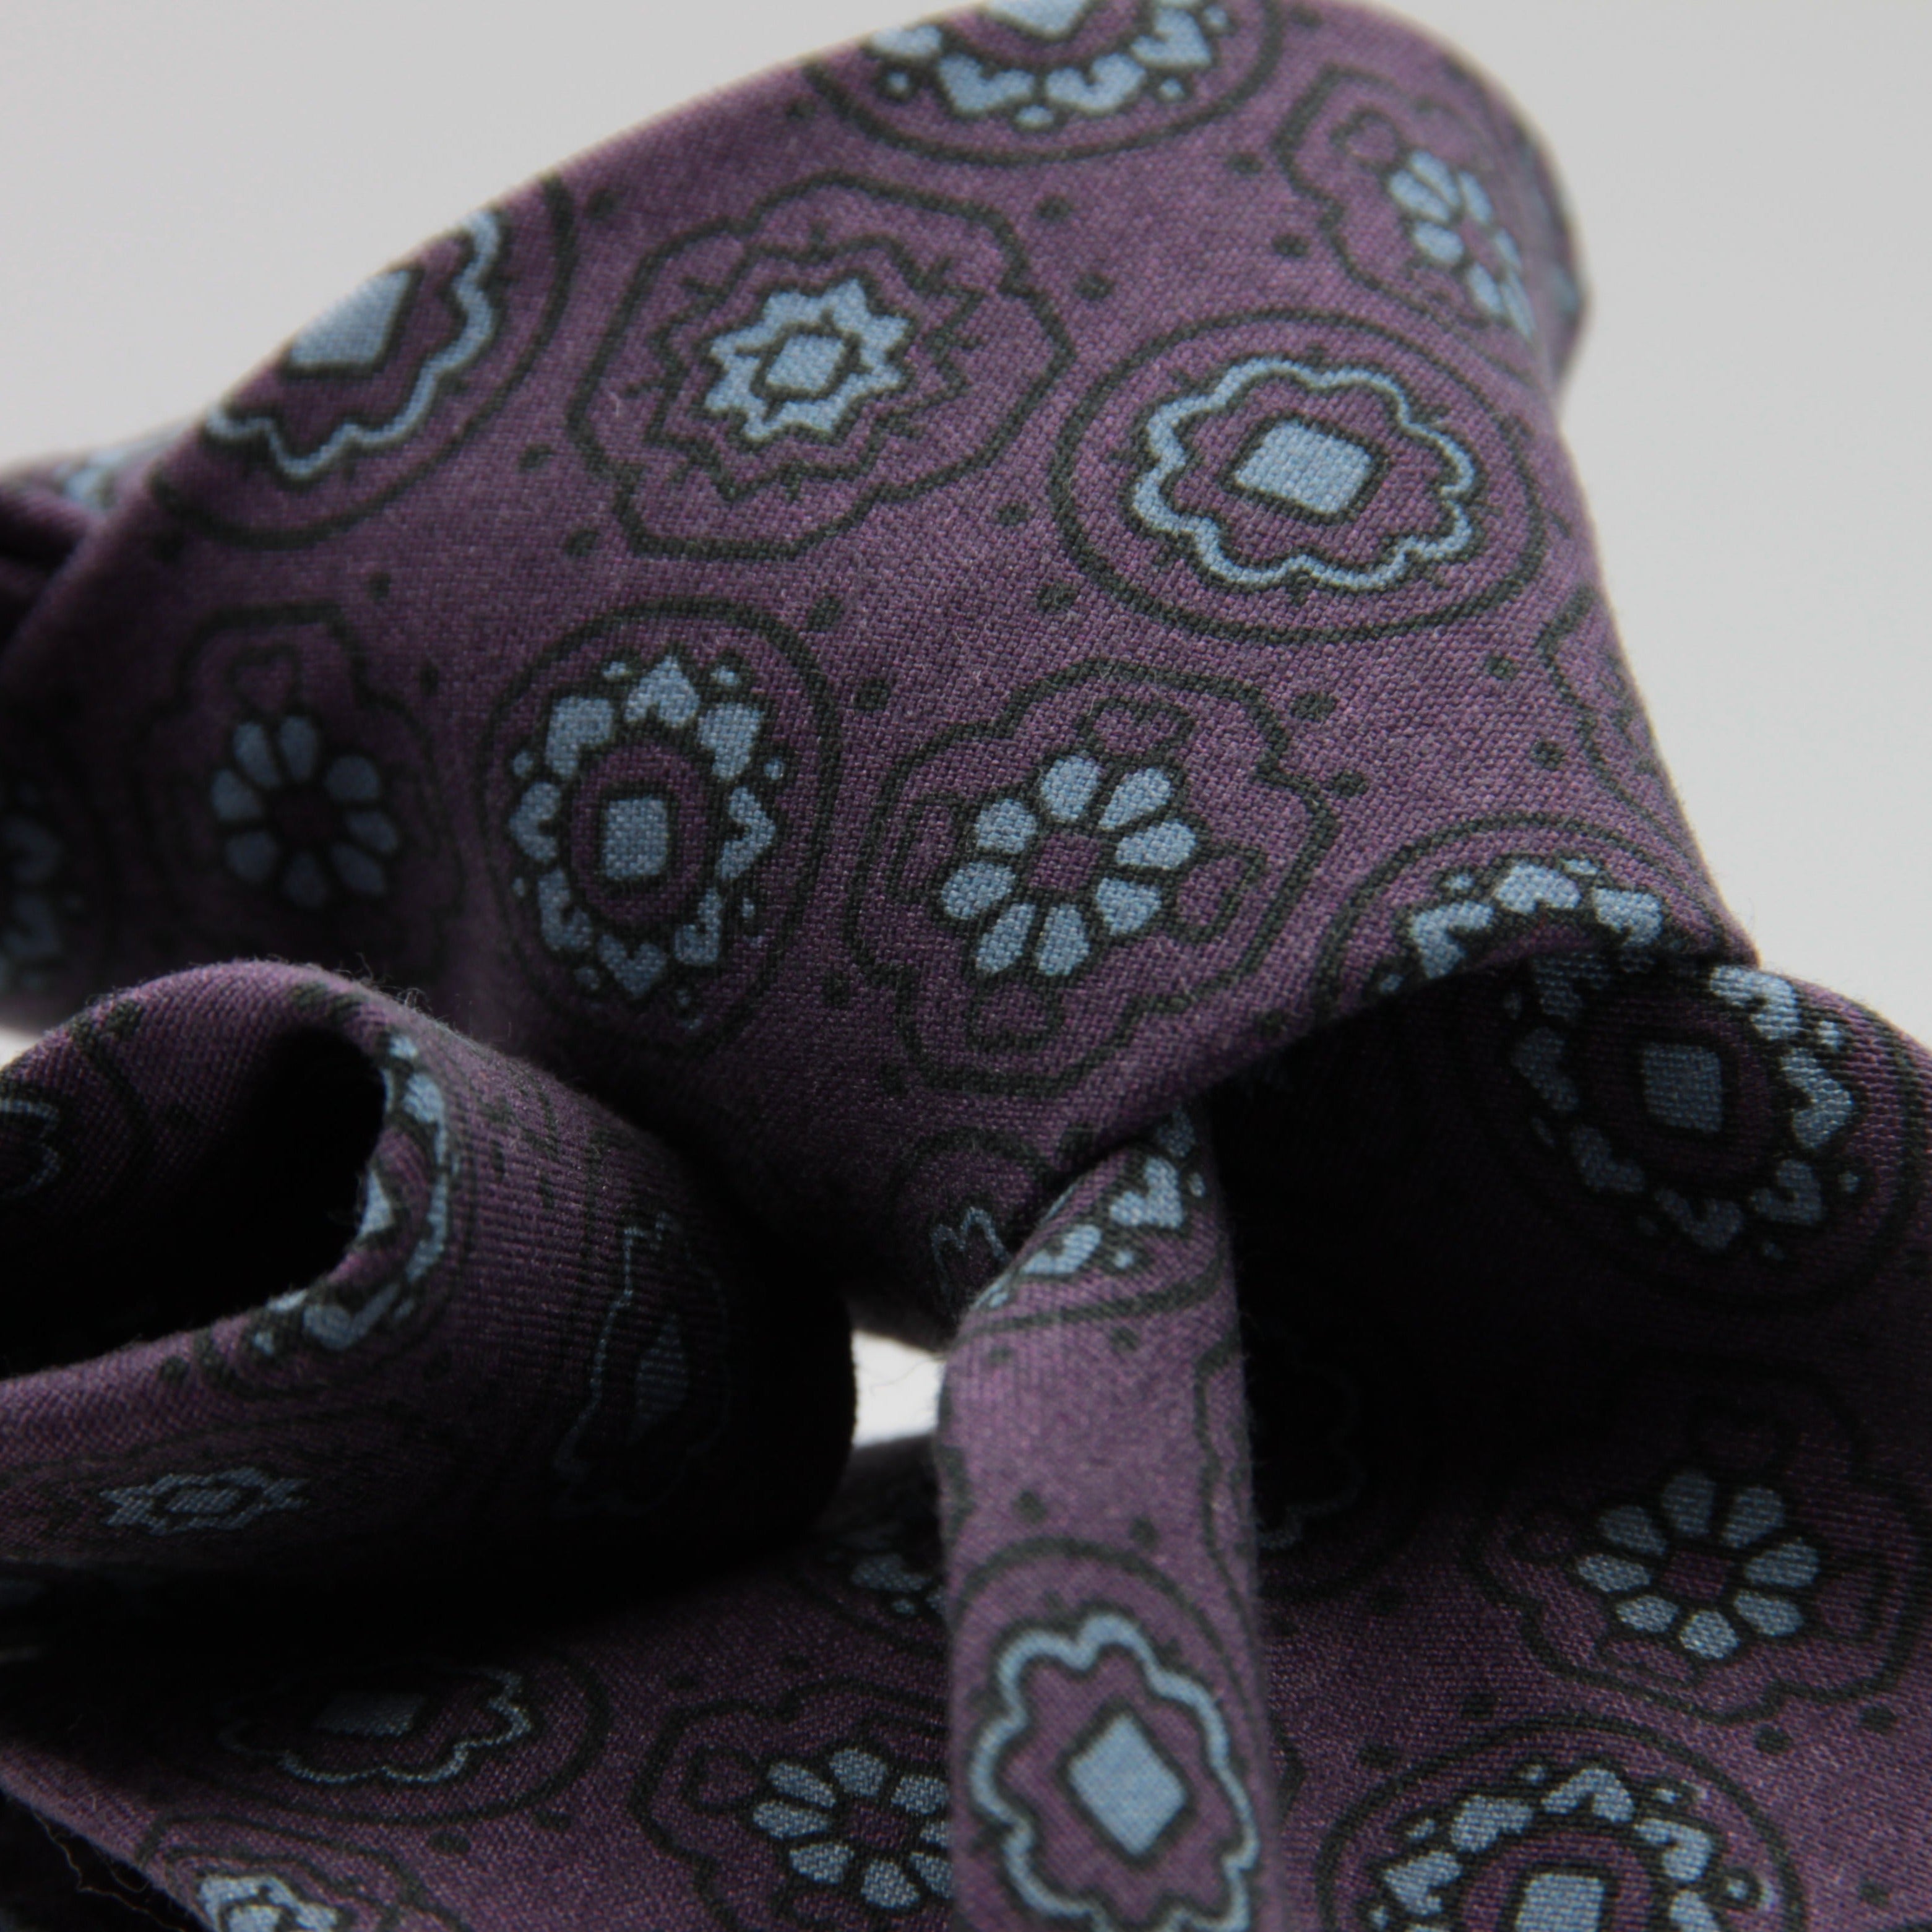 Cruciani & Bella 100% Printed Madder Silk  Italian fabric Unlined tie Purple and Light Blue Motifs Tie Handmade in Italy 8 cm x 150 cm #7642